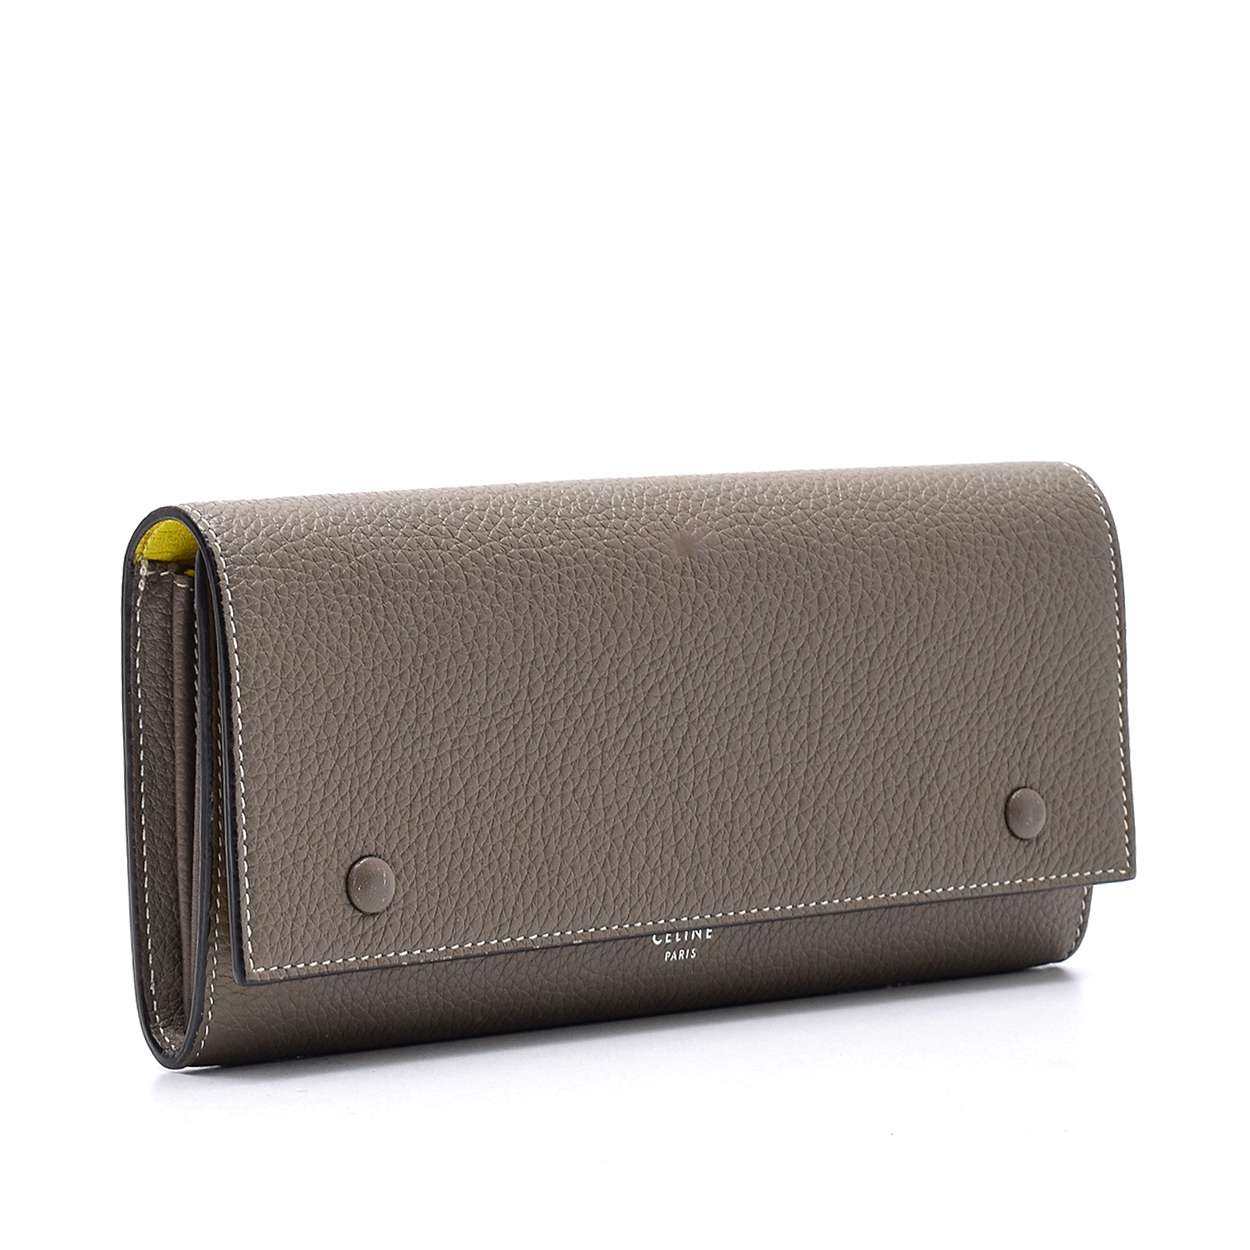 Celine  - Stone  Grained Leather Wallet